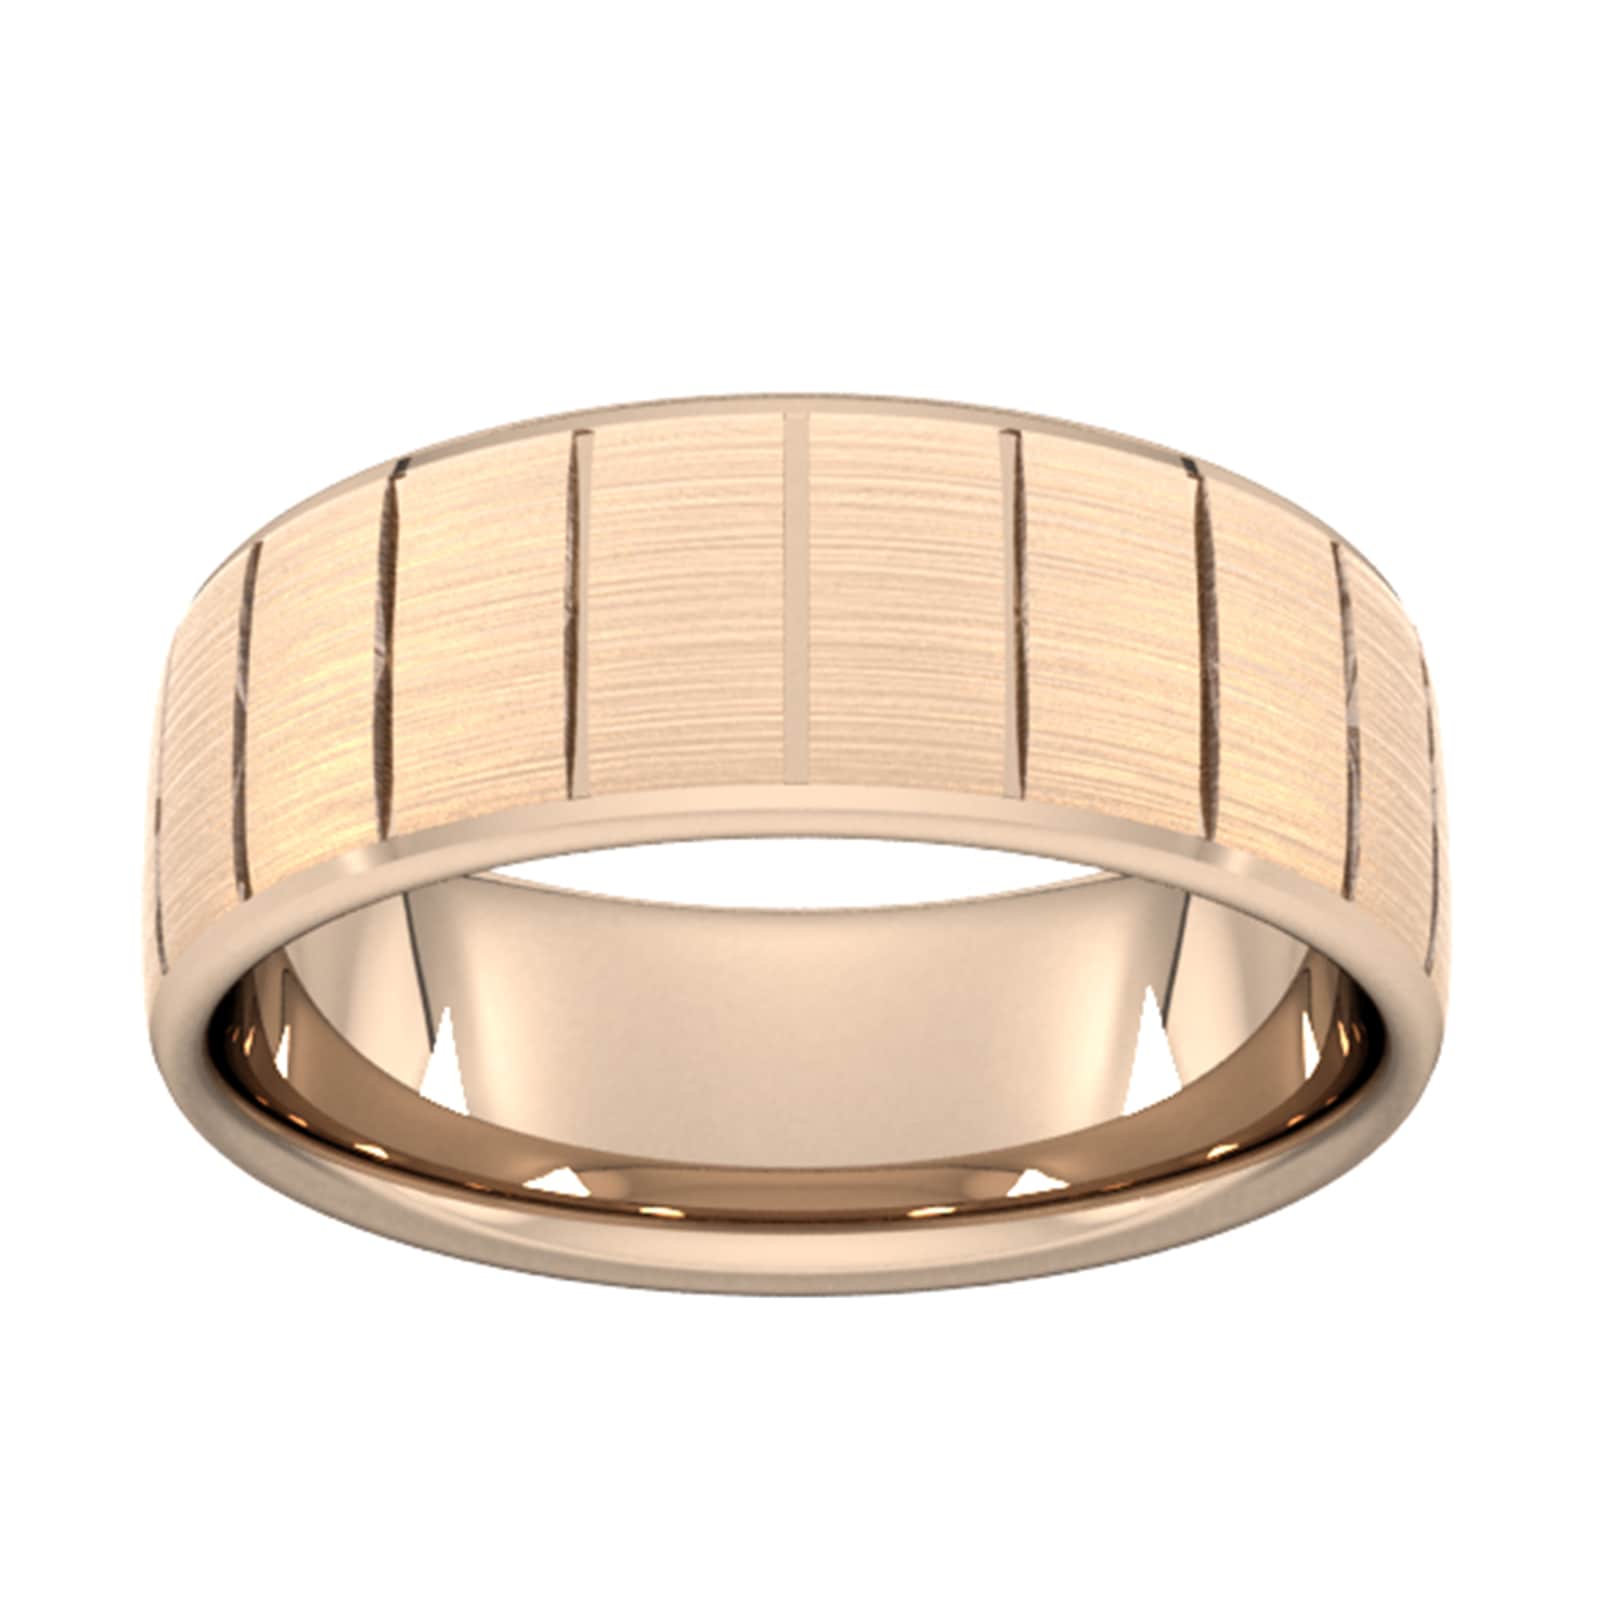 8mm Slight Court Standard Vertical Lines Wedding Ring In 9 Carat Rose Gold - Ring Size H